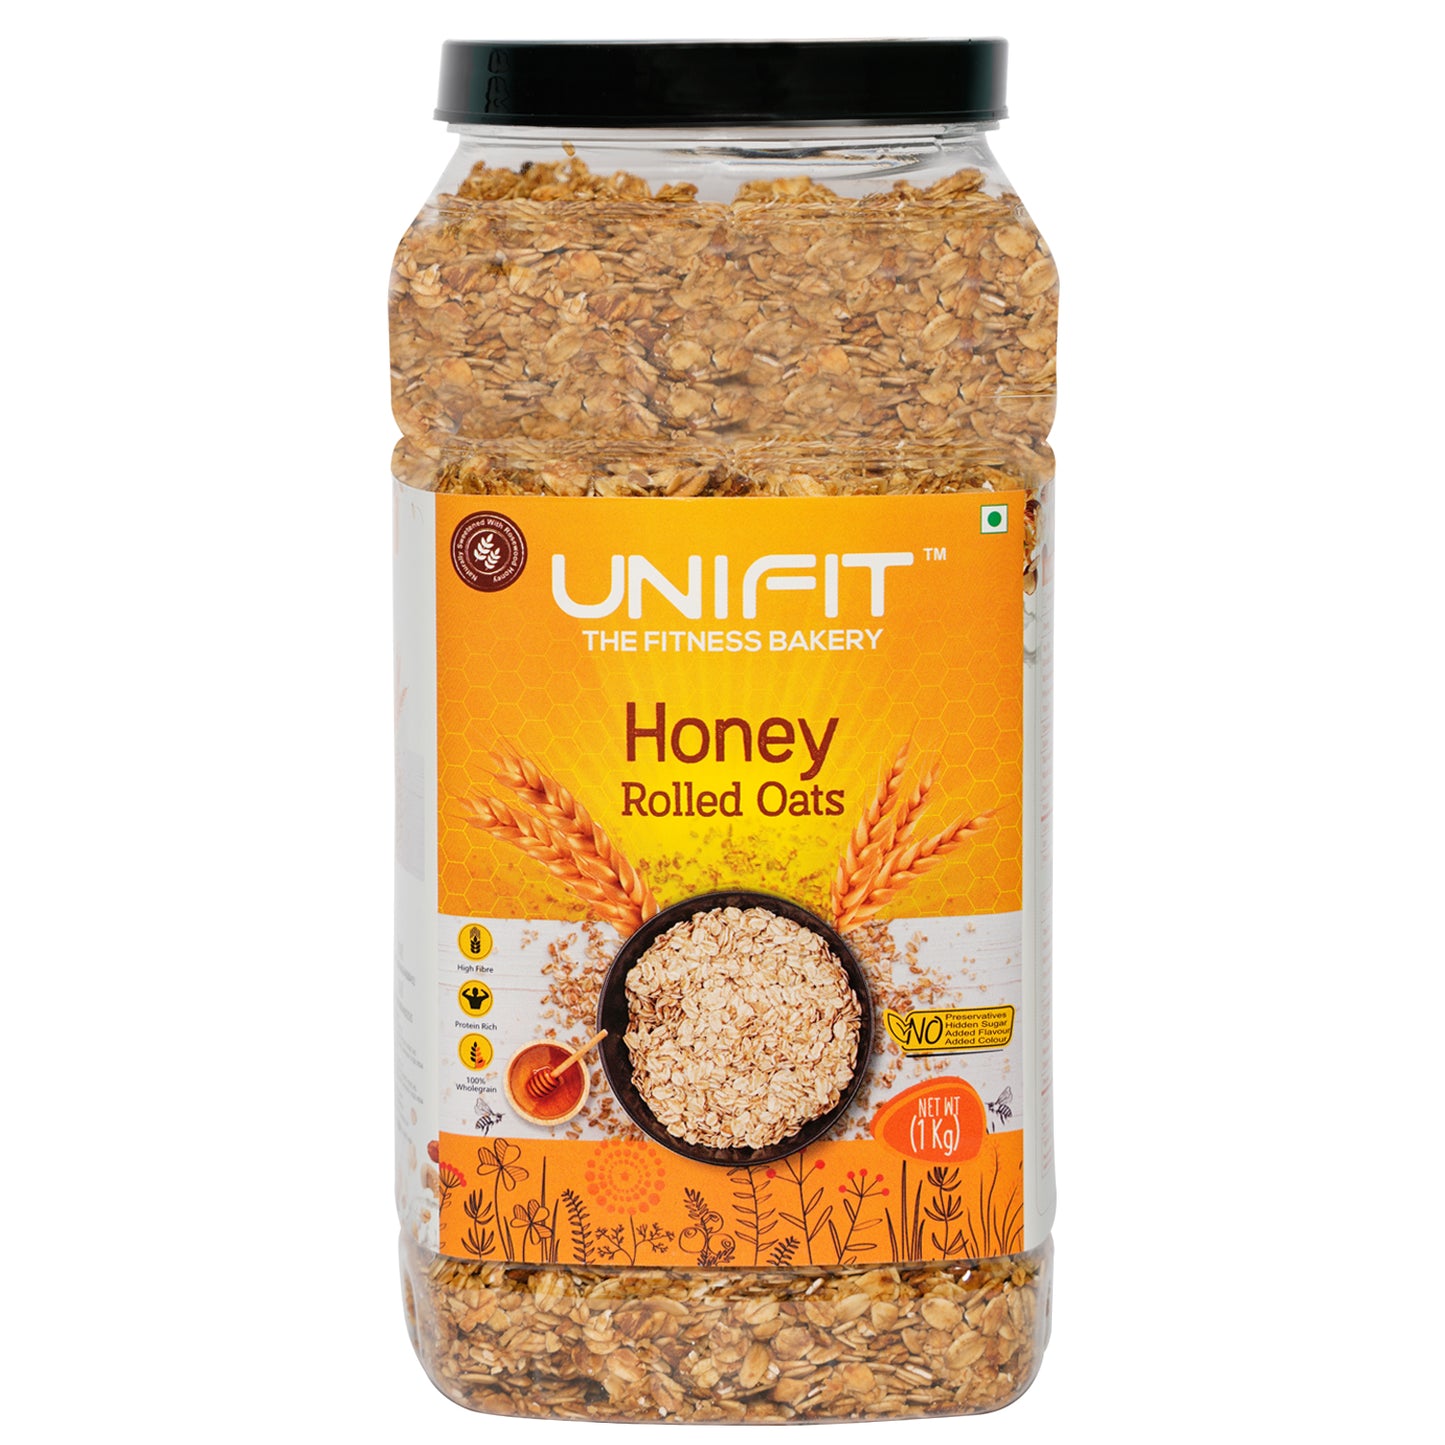 UNIFIT Honey Rolled Oats 1kg